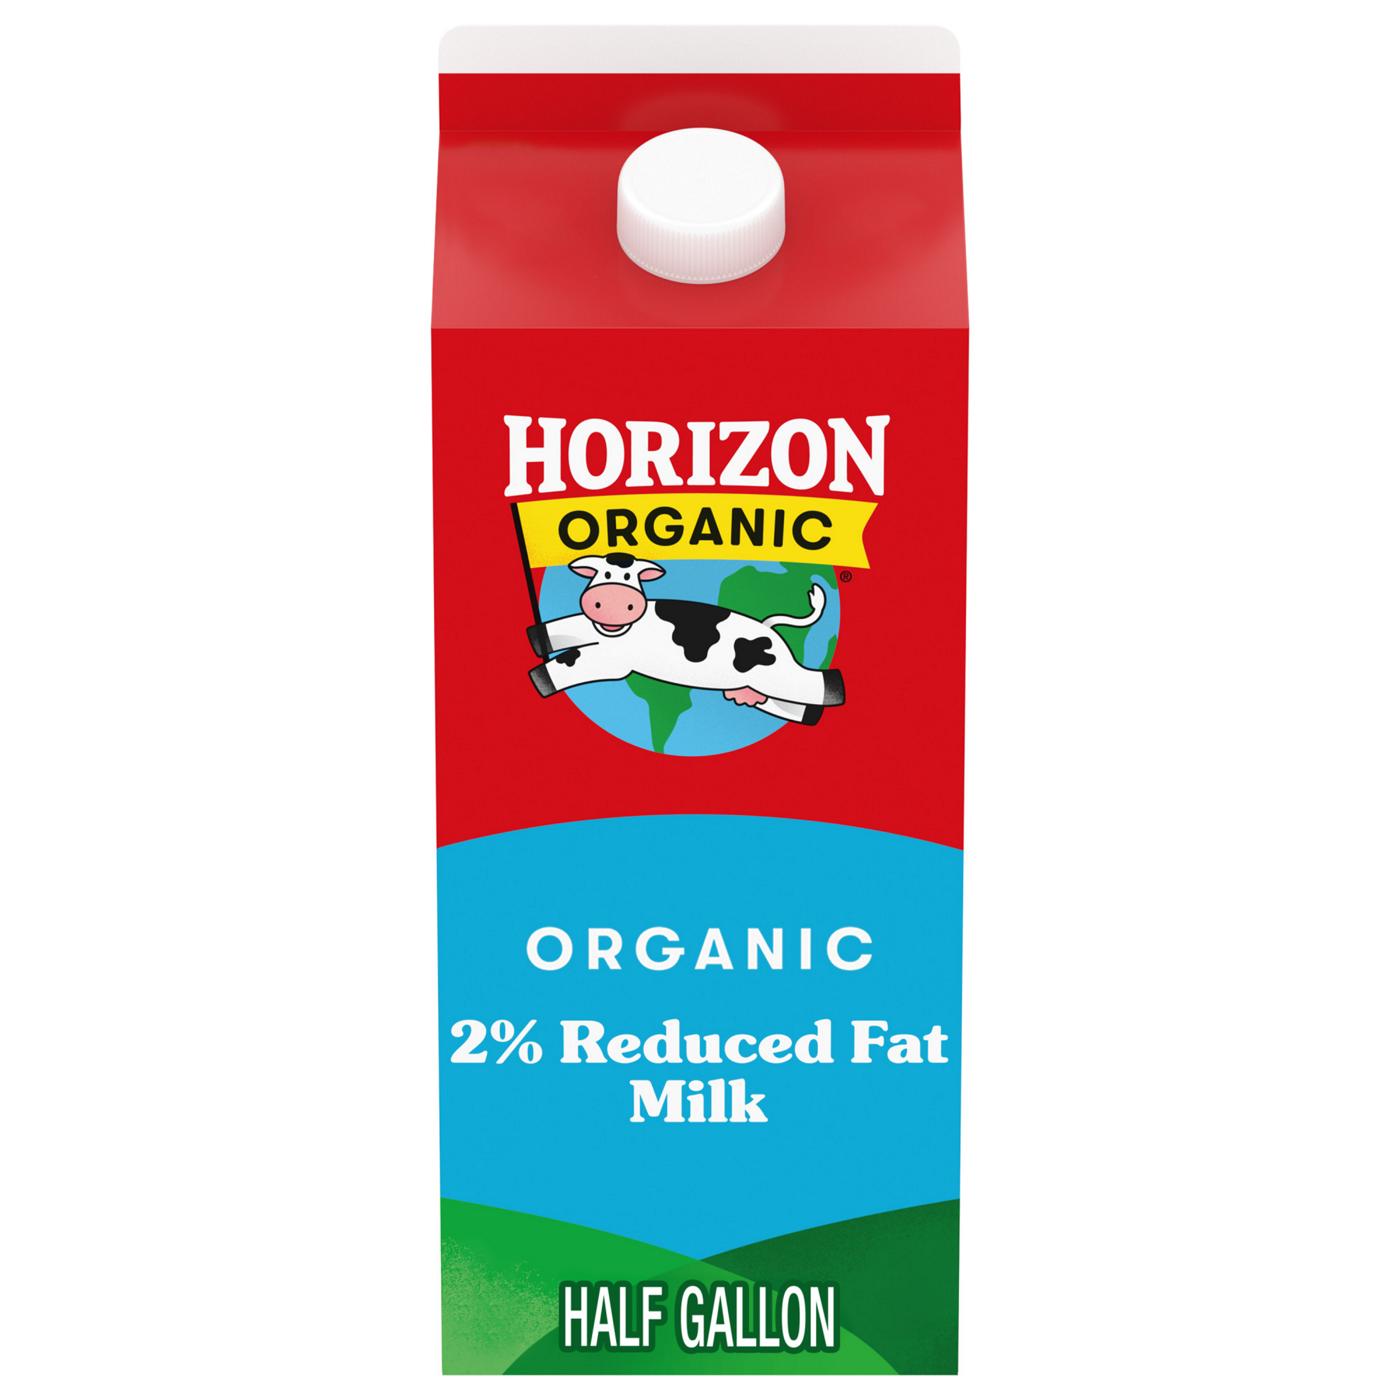 Horizon Organic 2% Reduced Fat Milk; image 1 of 6